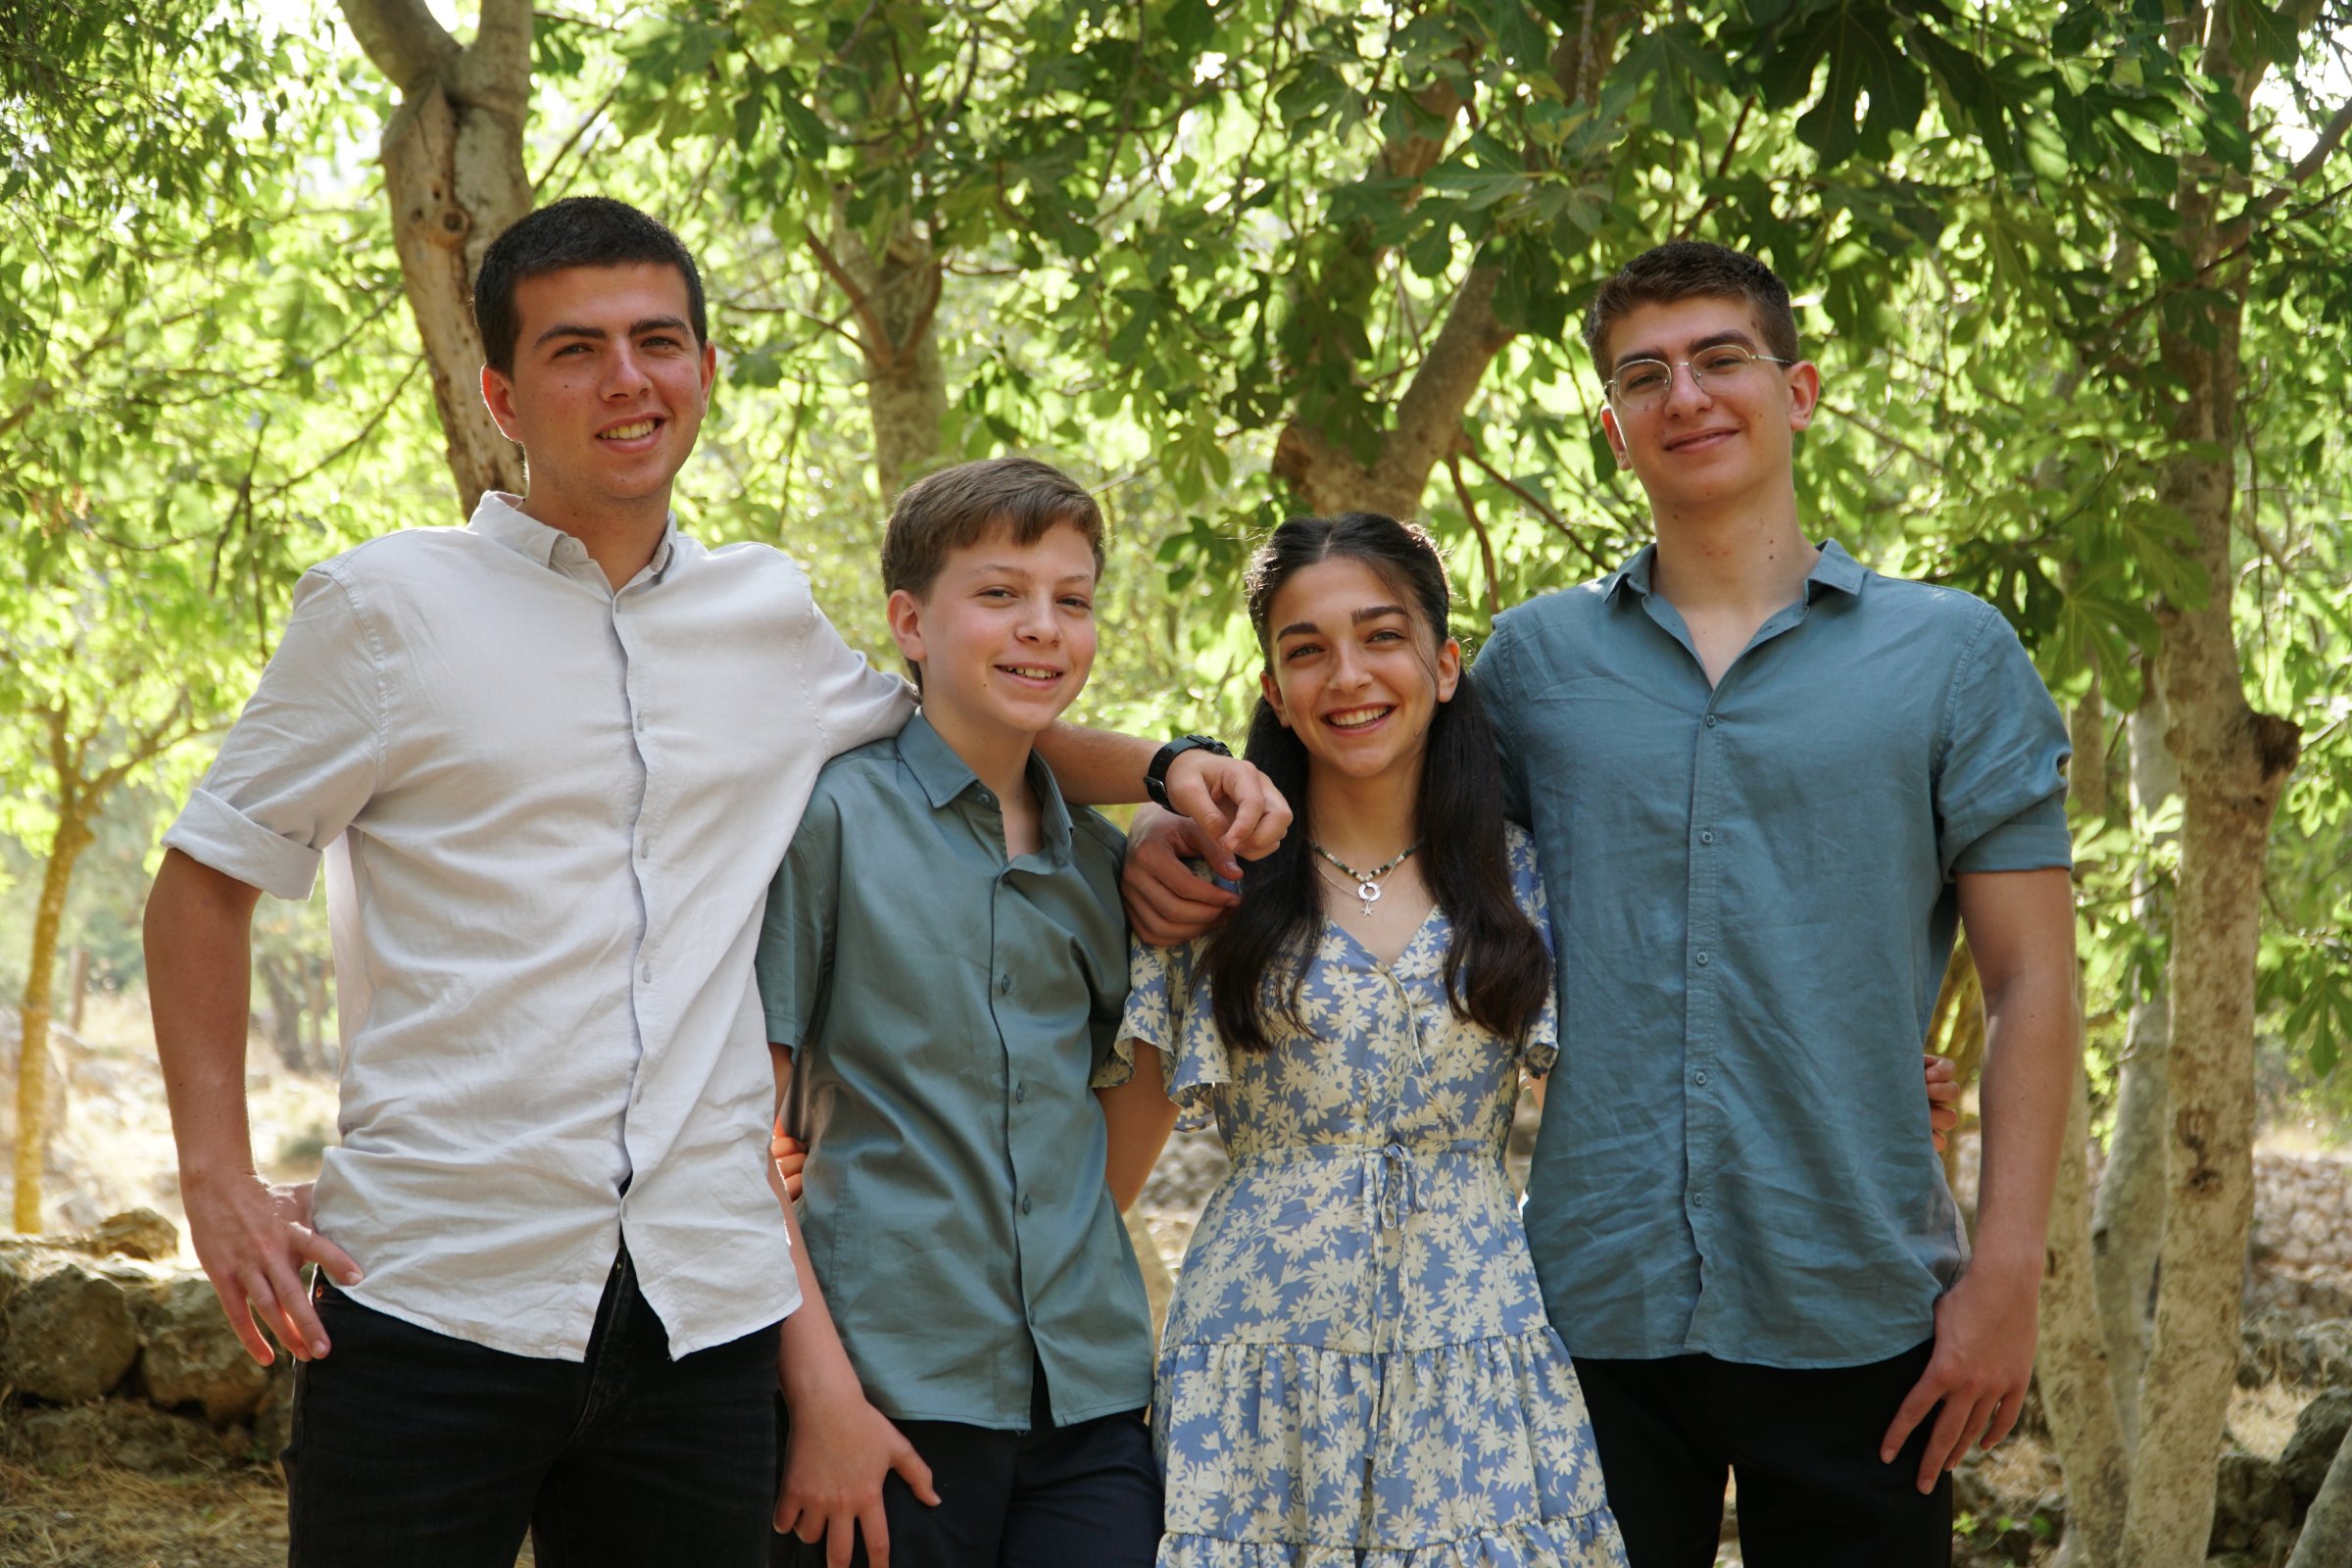 Yannai Kaminka (left) with his four siblings at his brother's Bar Mitzvah.